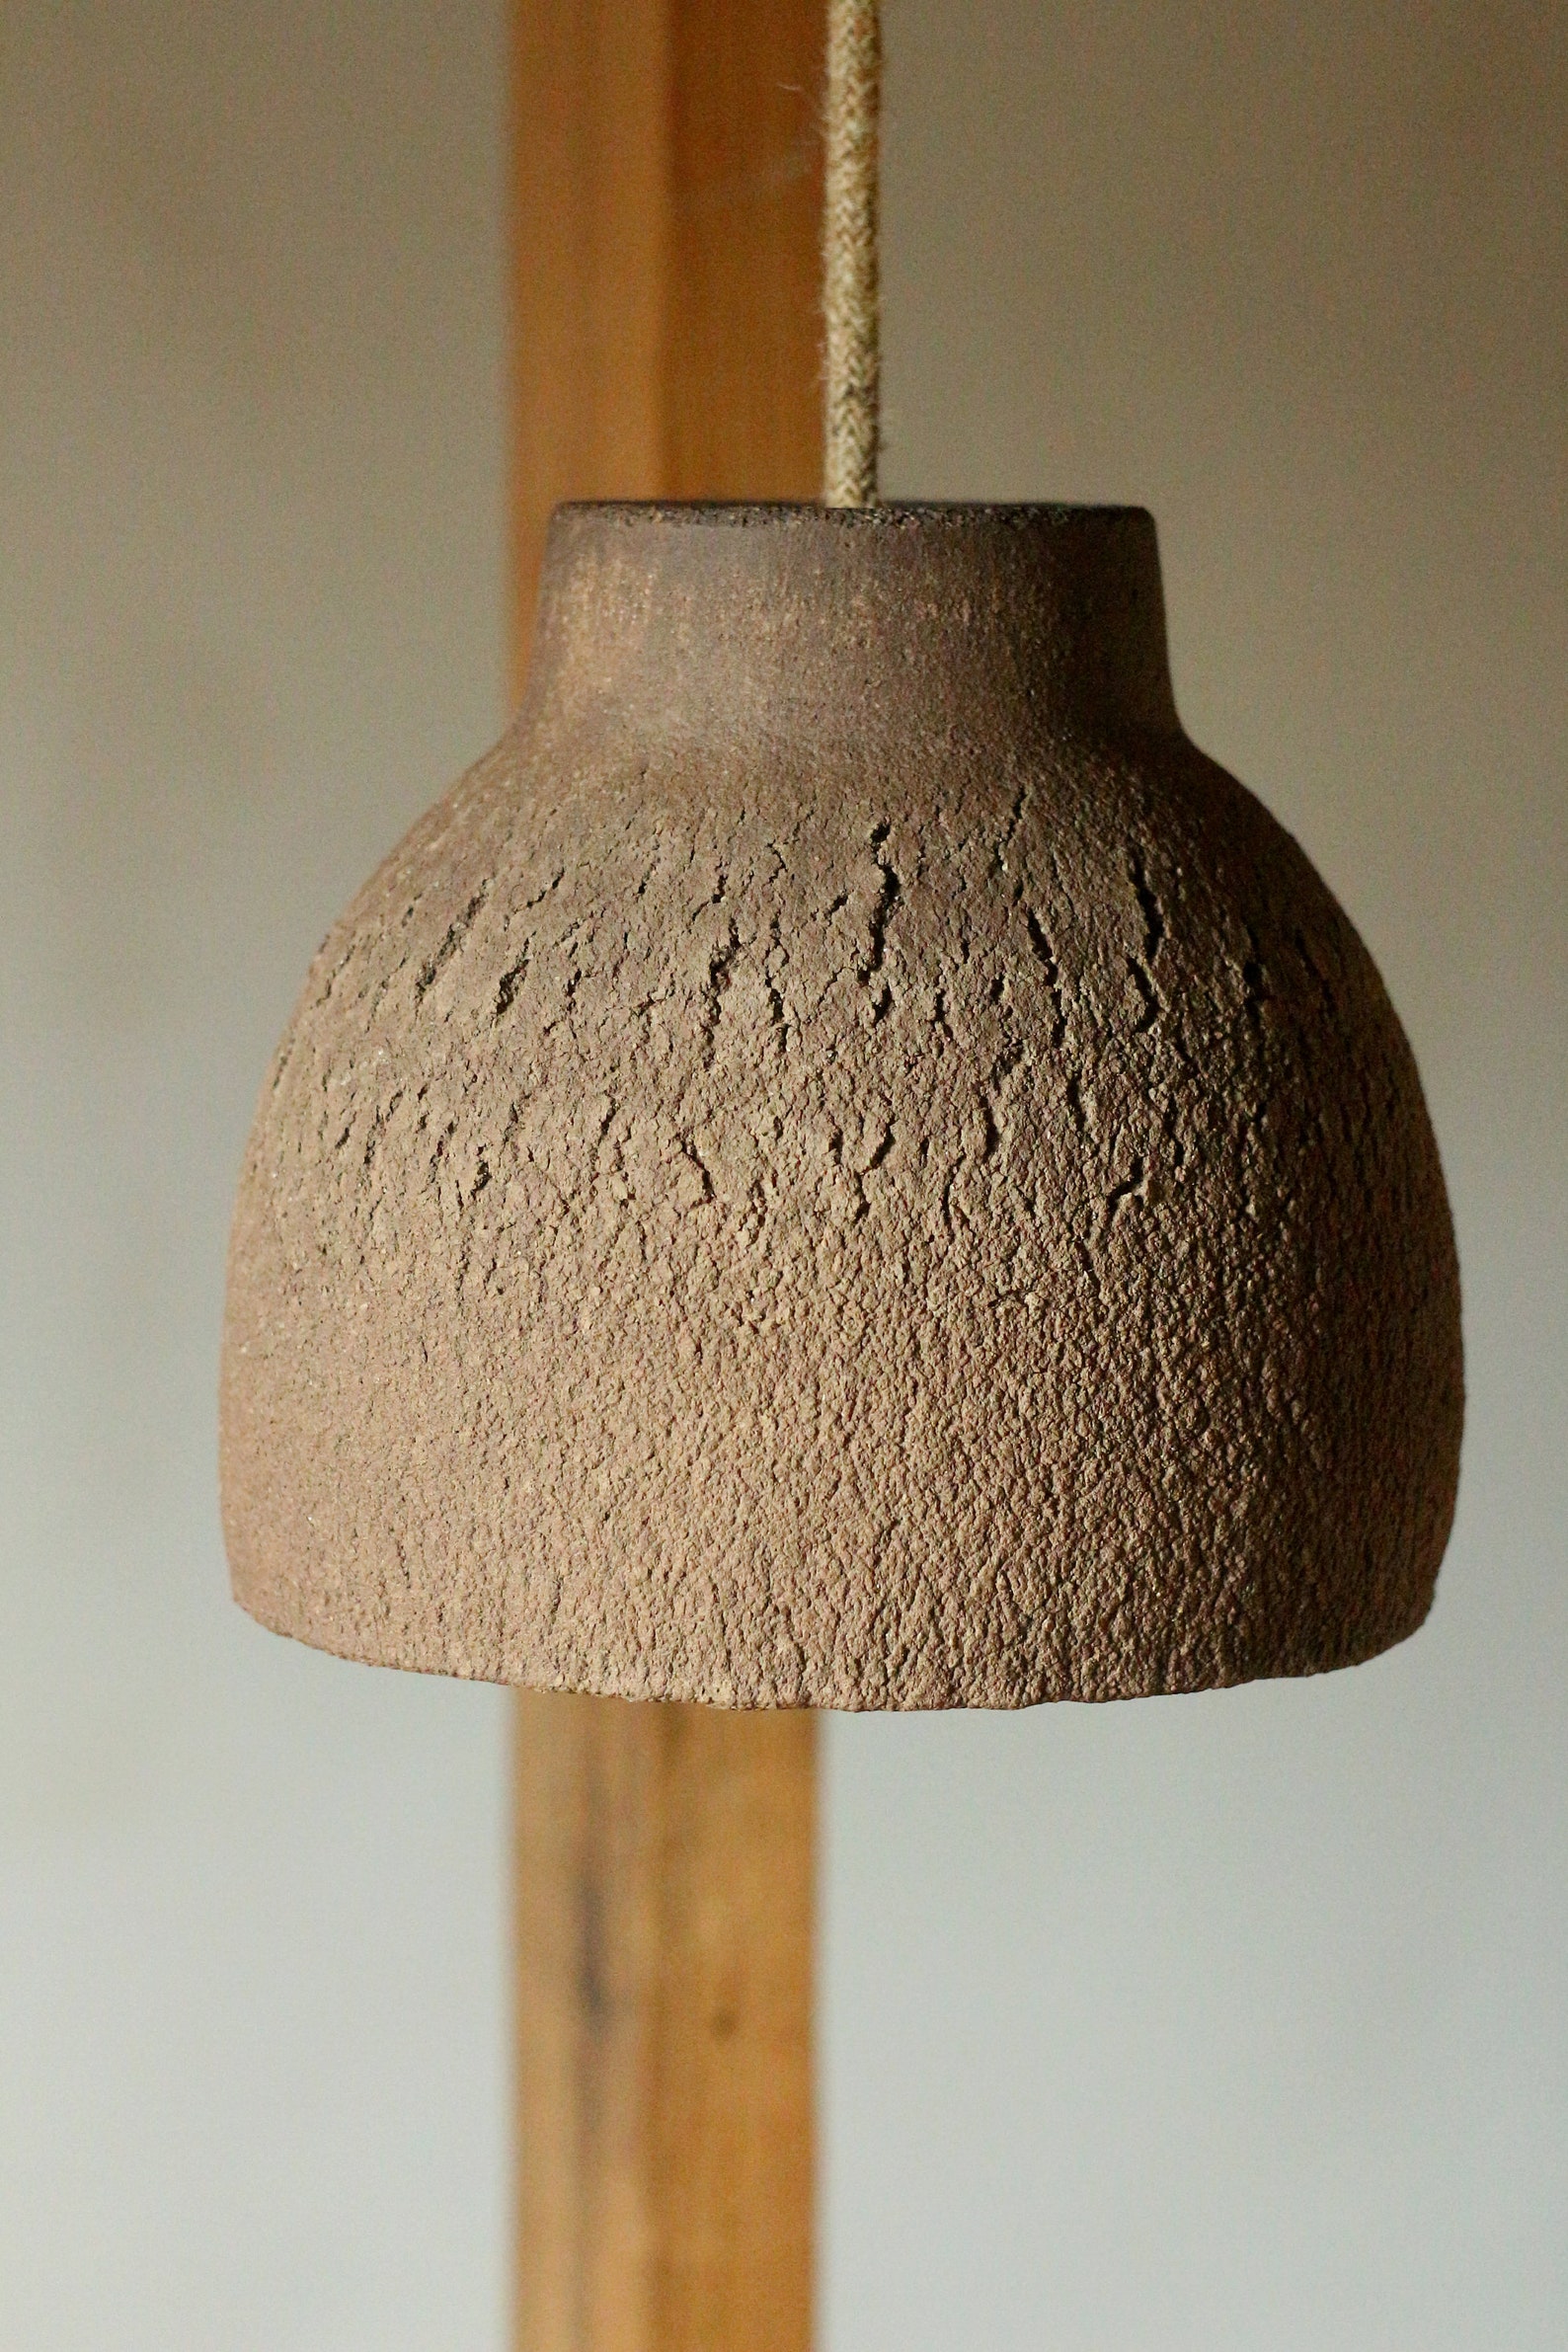 Ceramic Lamp Shade Pendant Lights Small Lamp Shade - Etsy